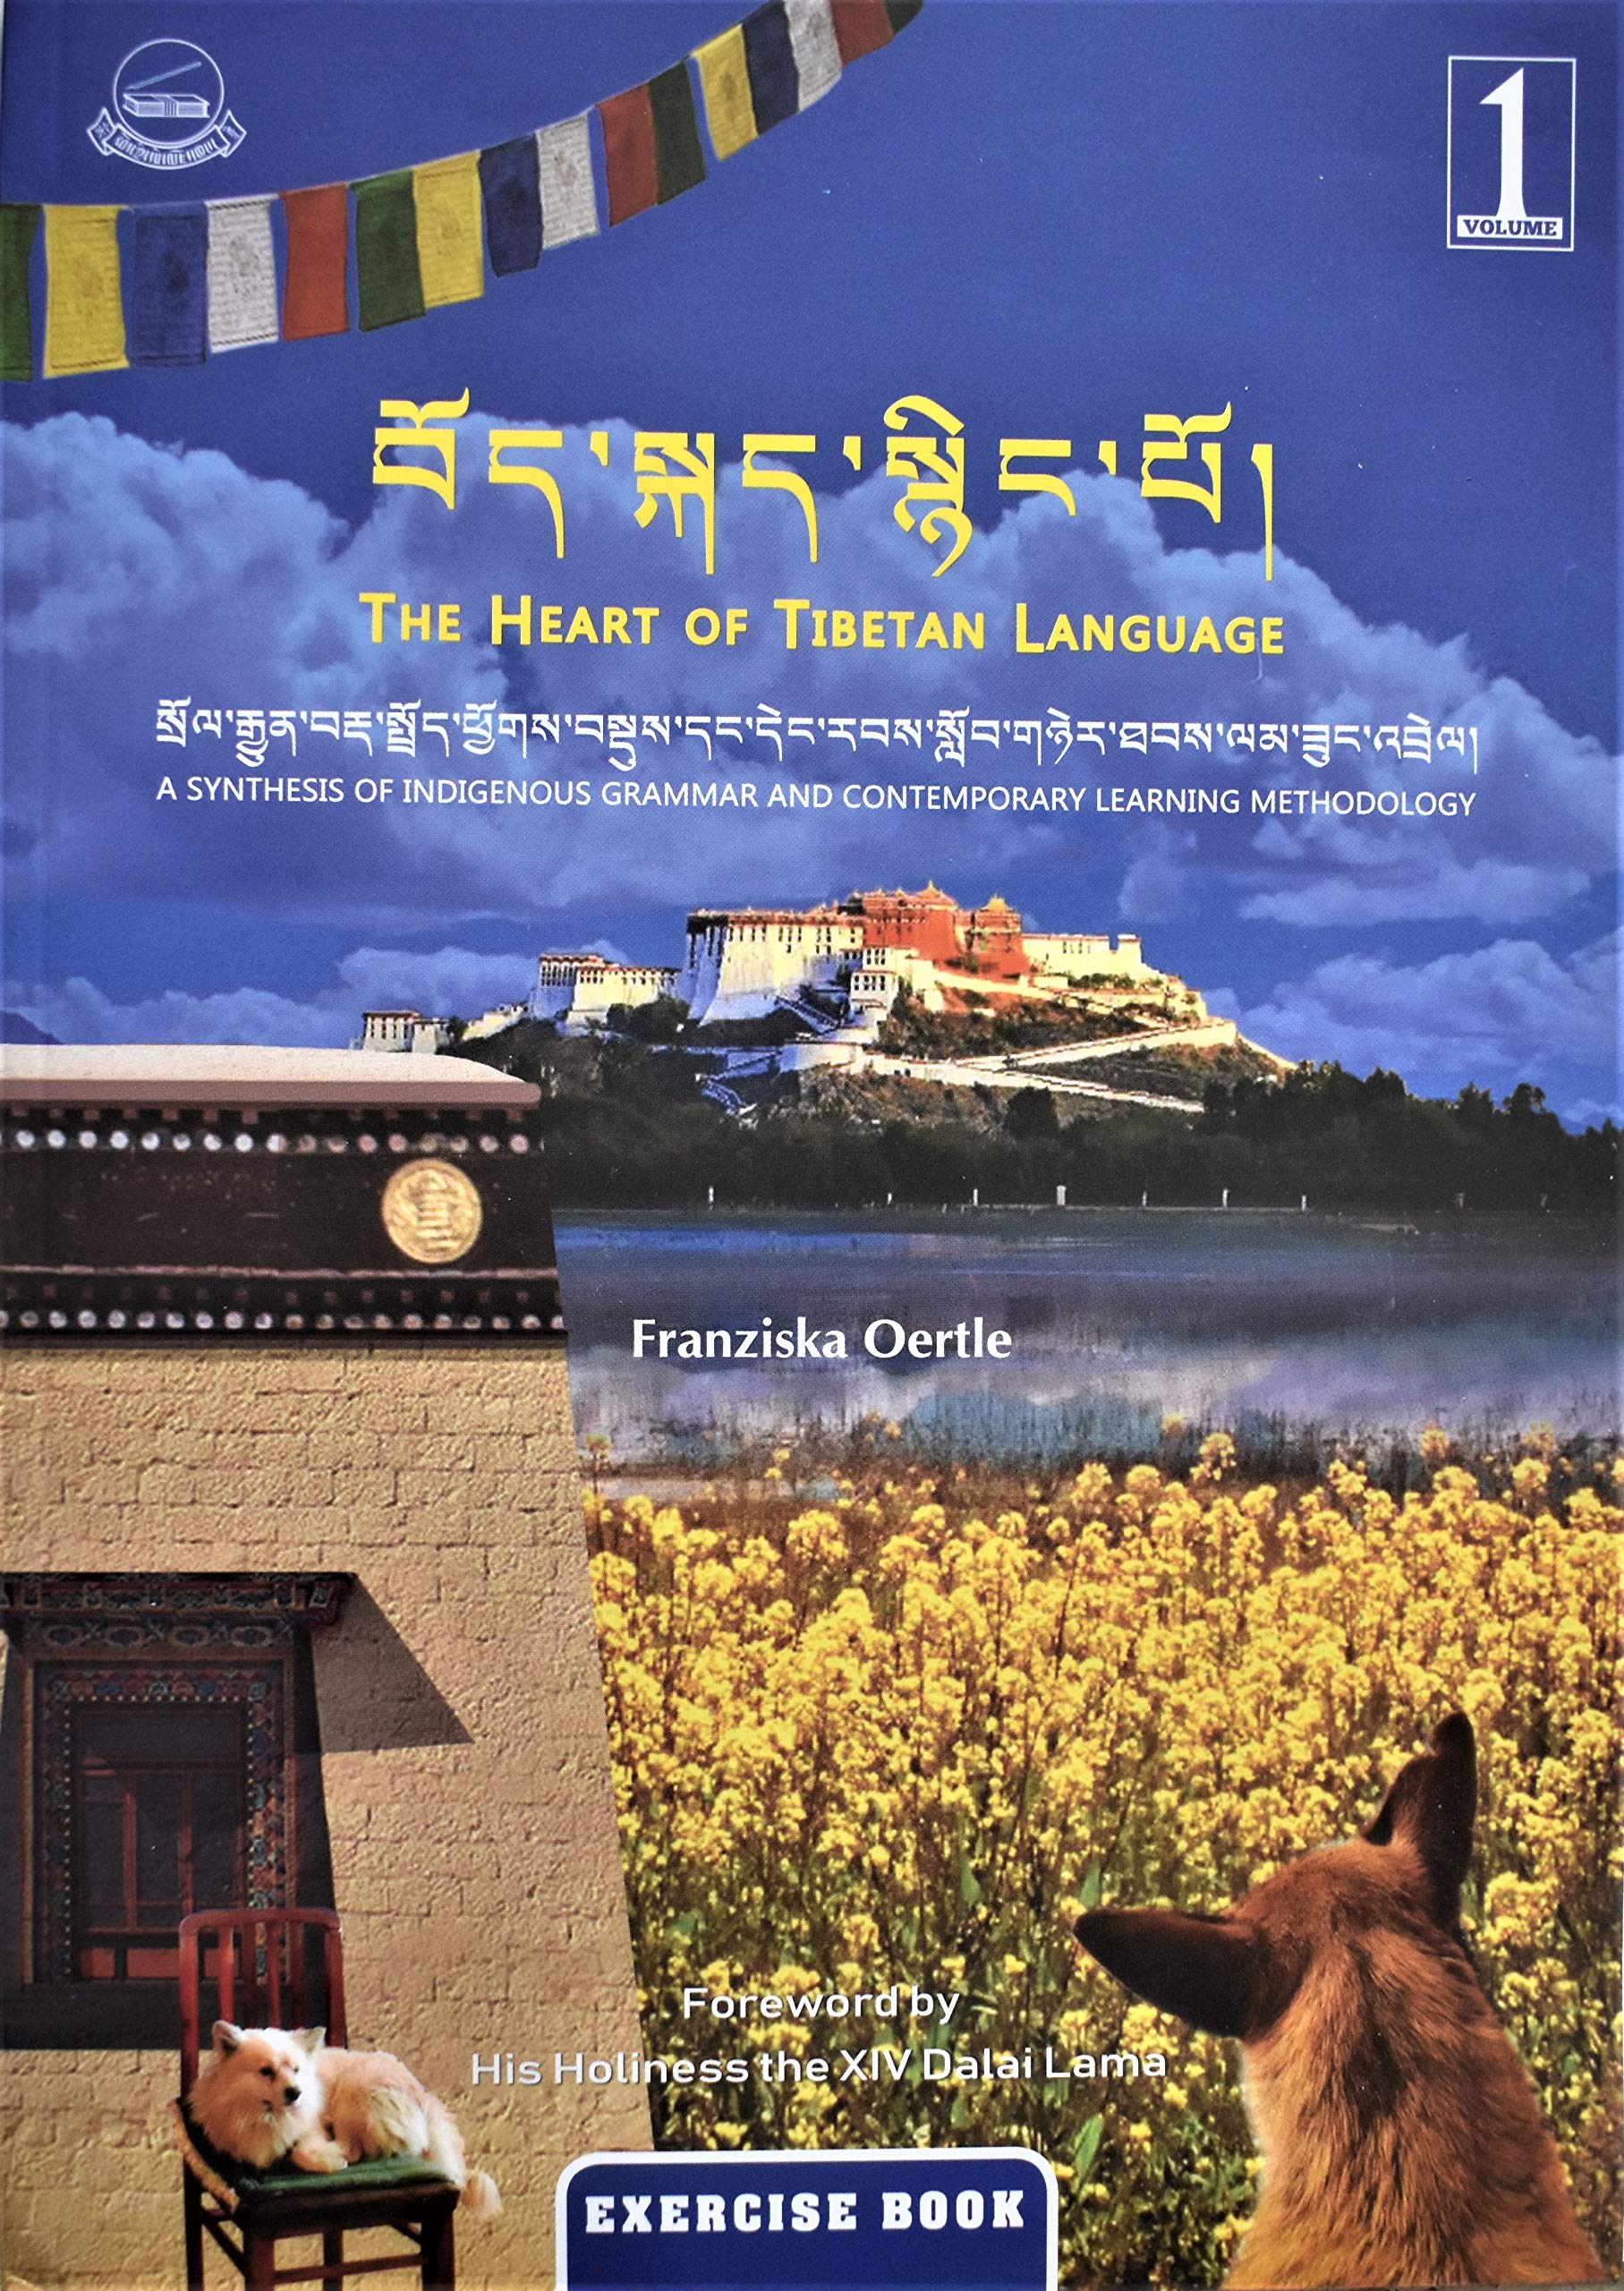 The Heart of Tibetan Language